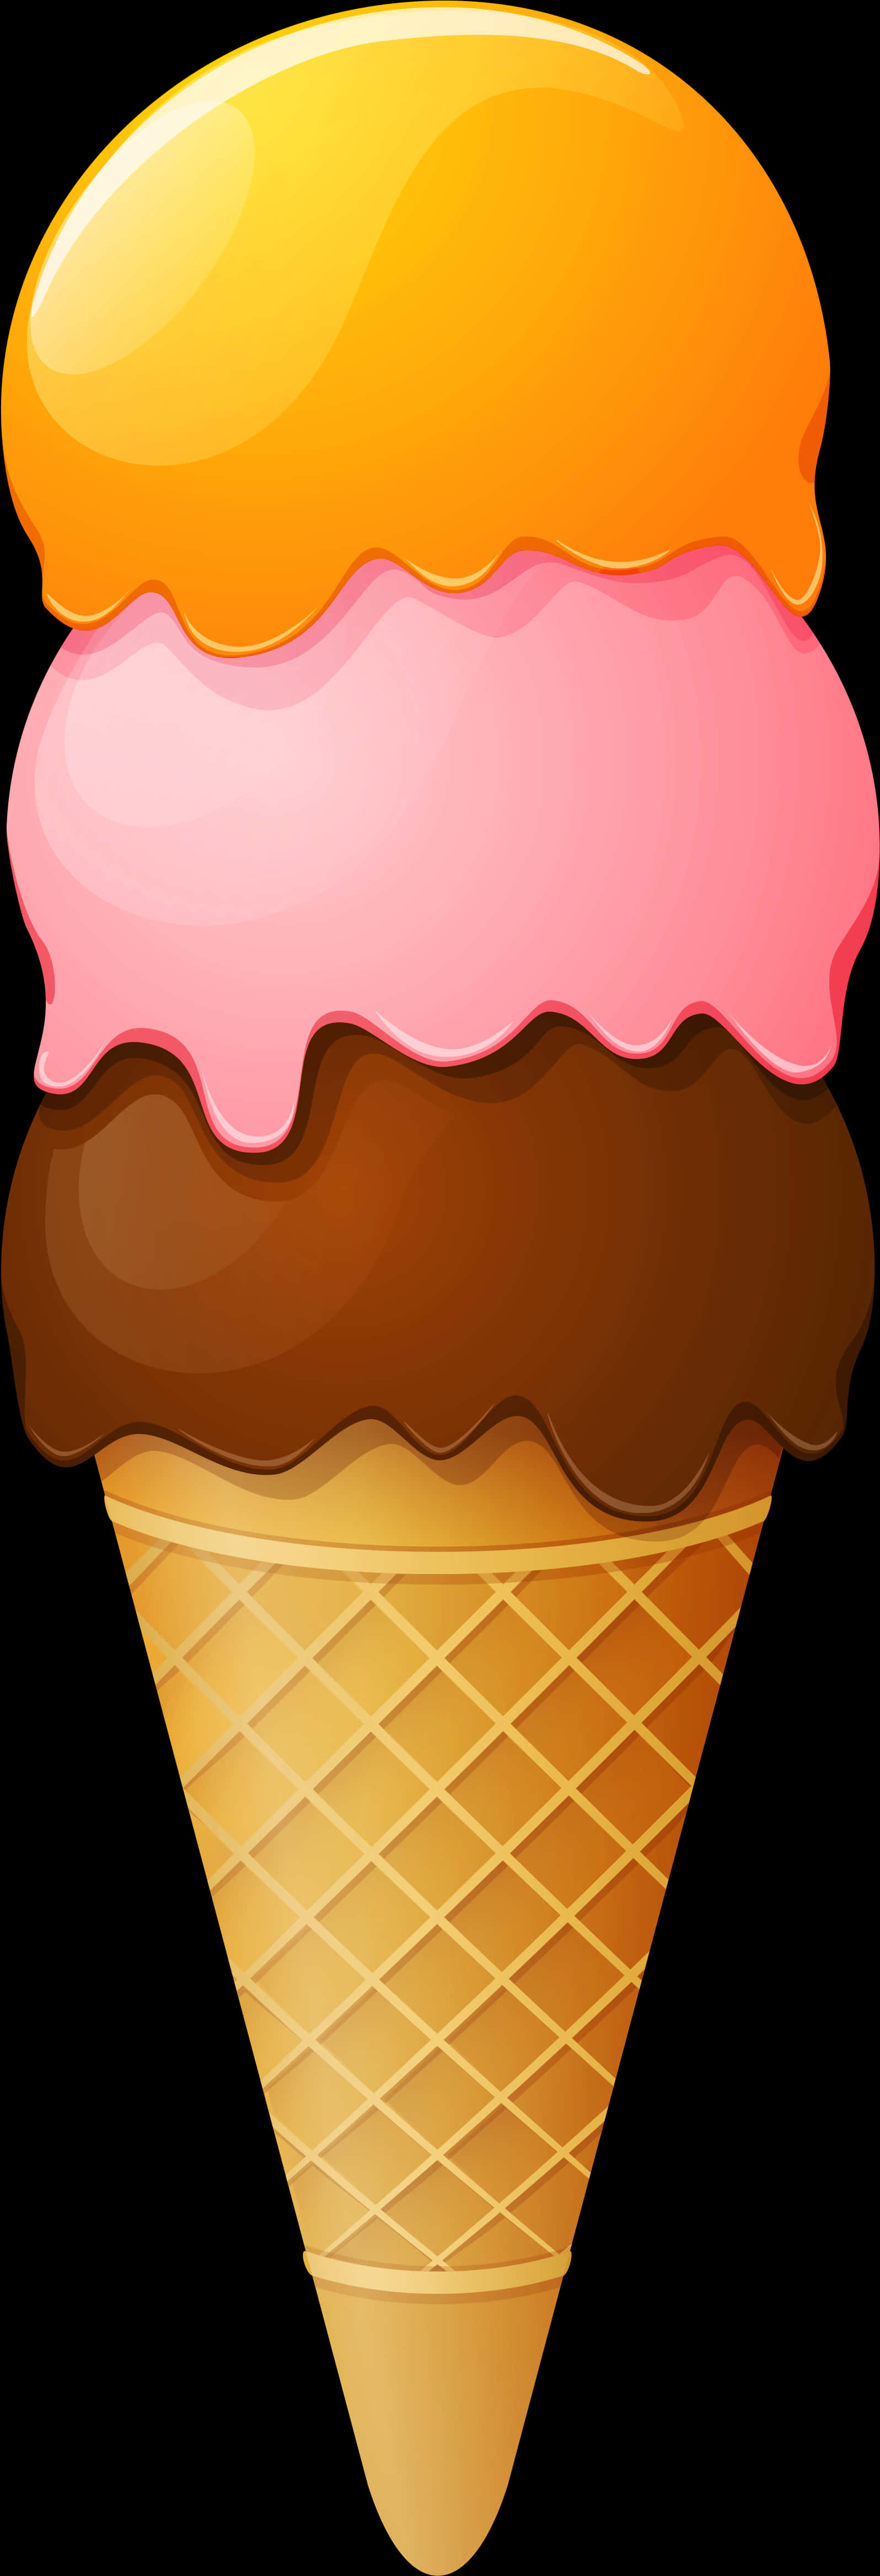 Triple Scoop Ice Cream Cone Clipart PNG image